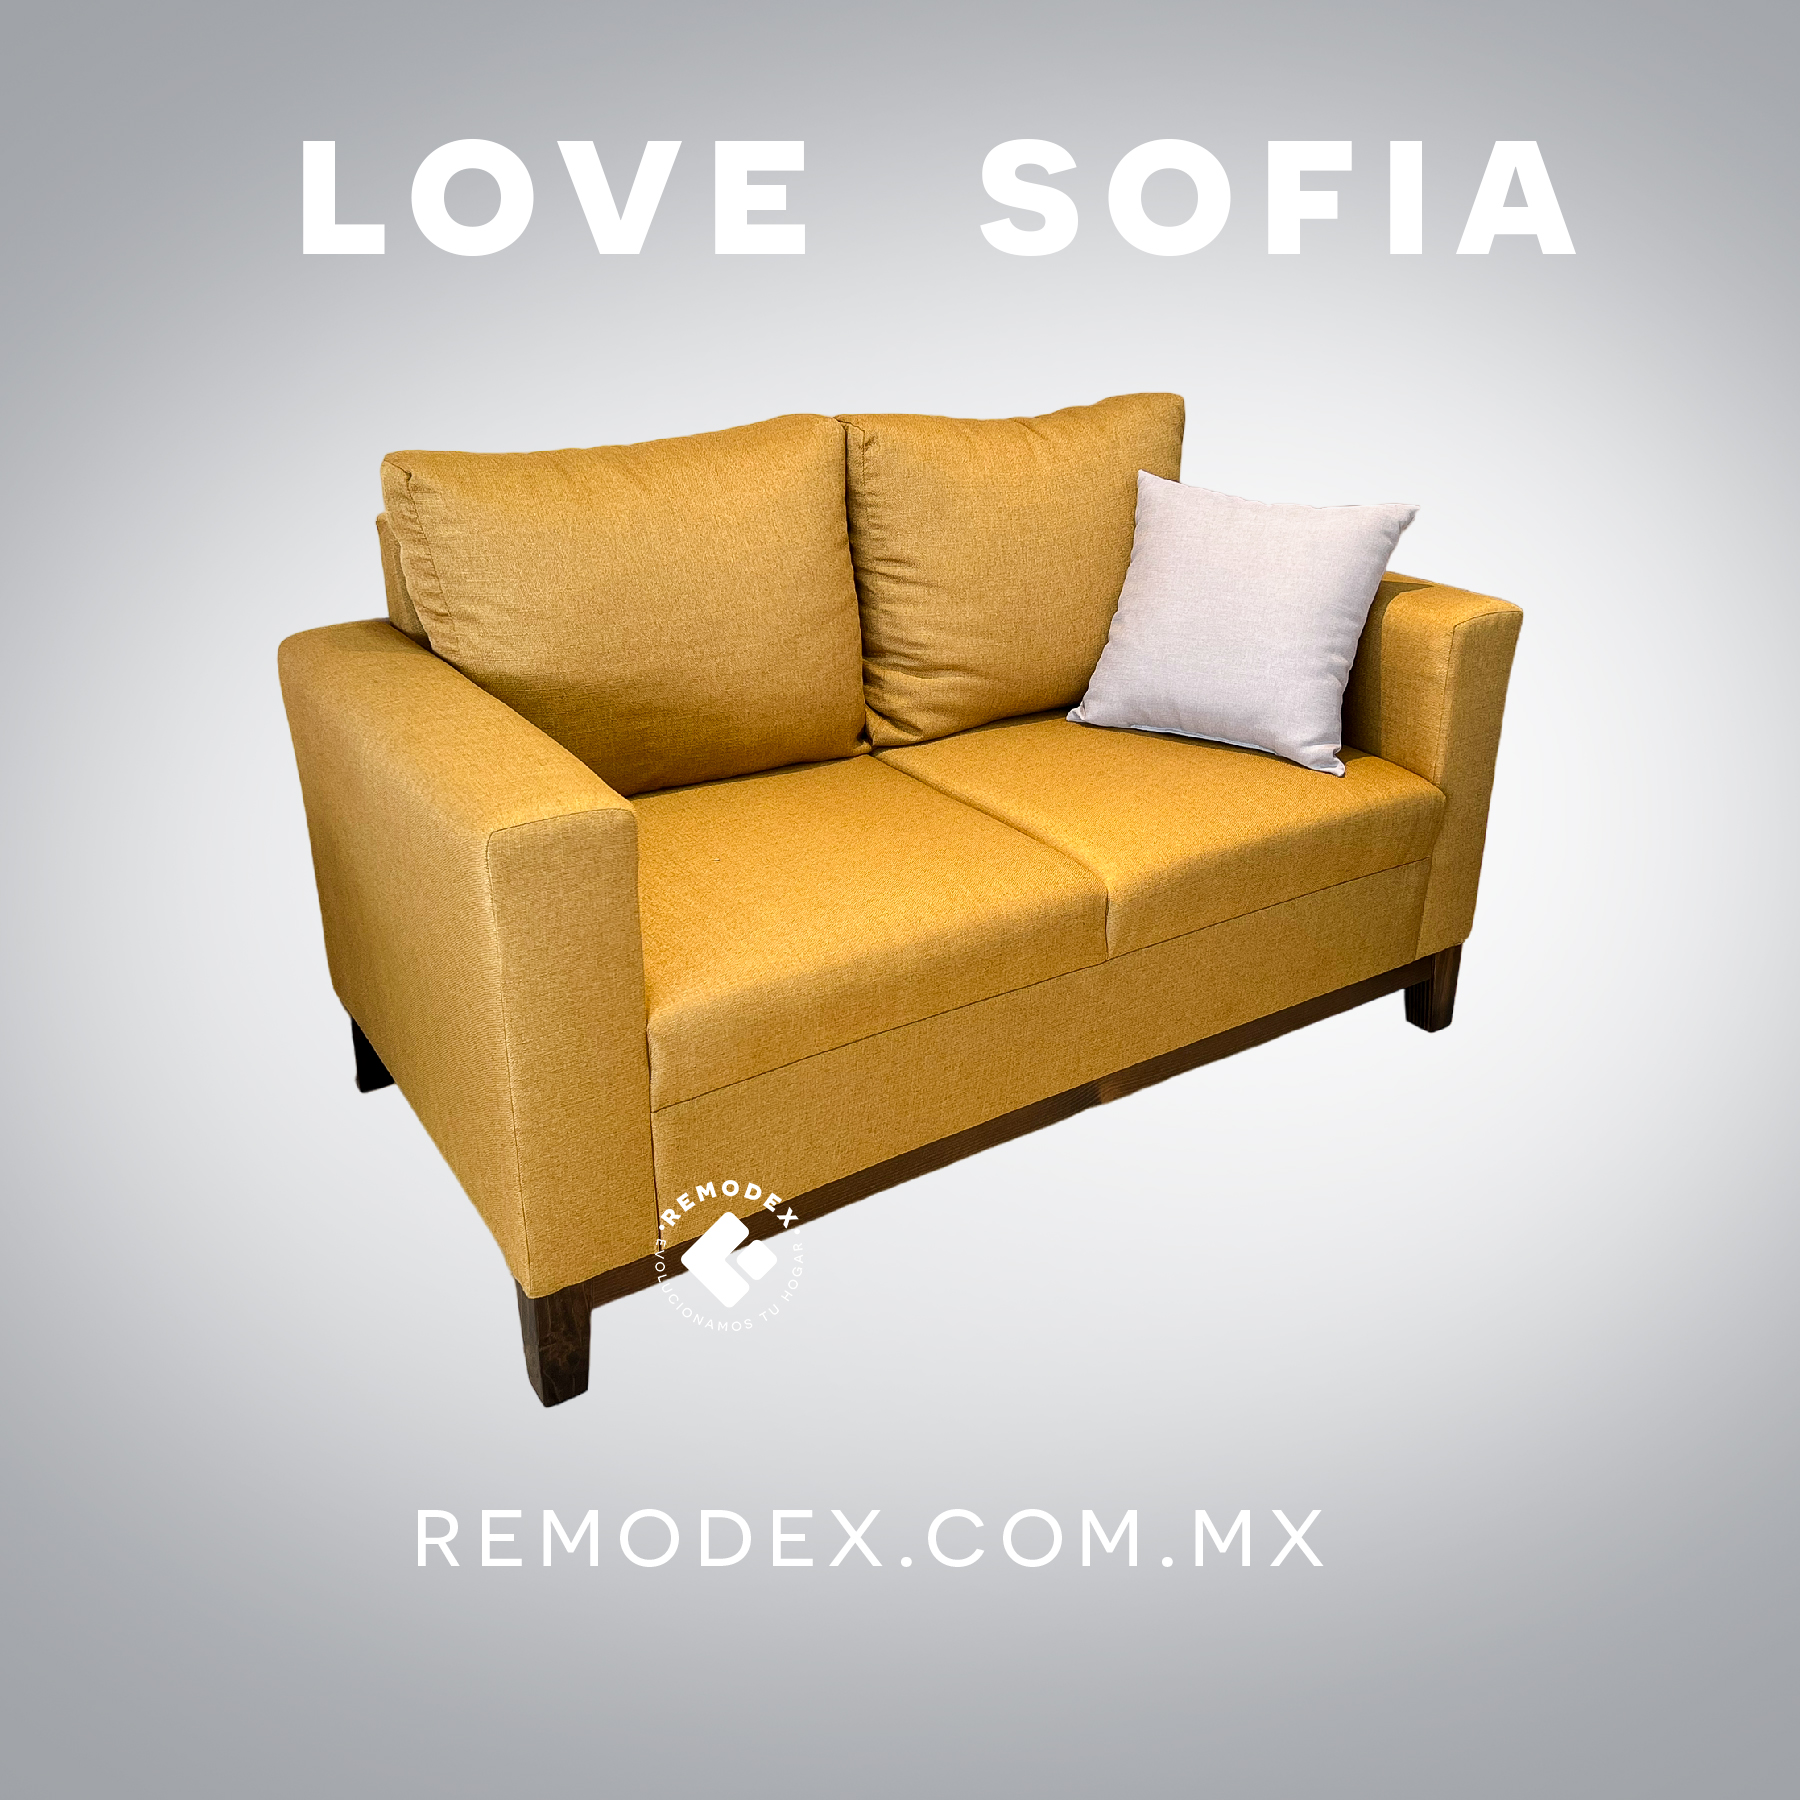 LOVE SEAT SOFIA